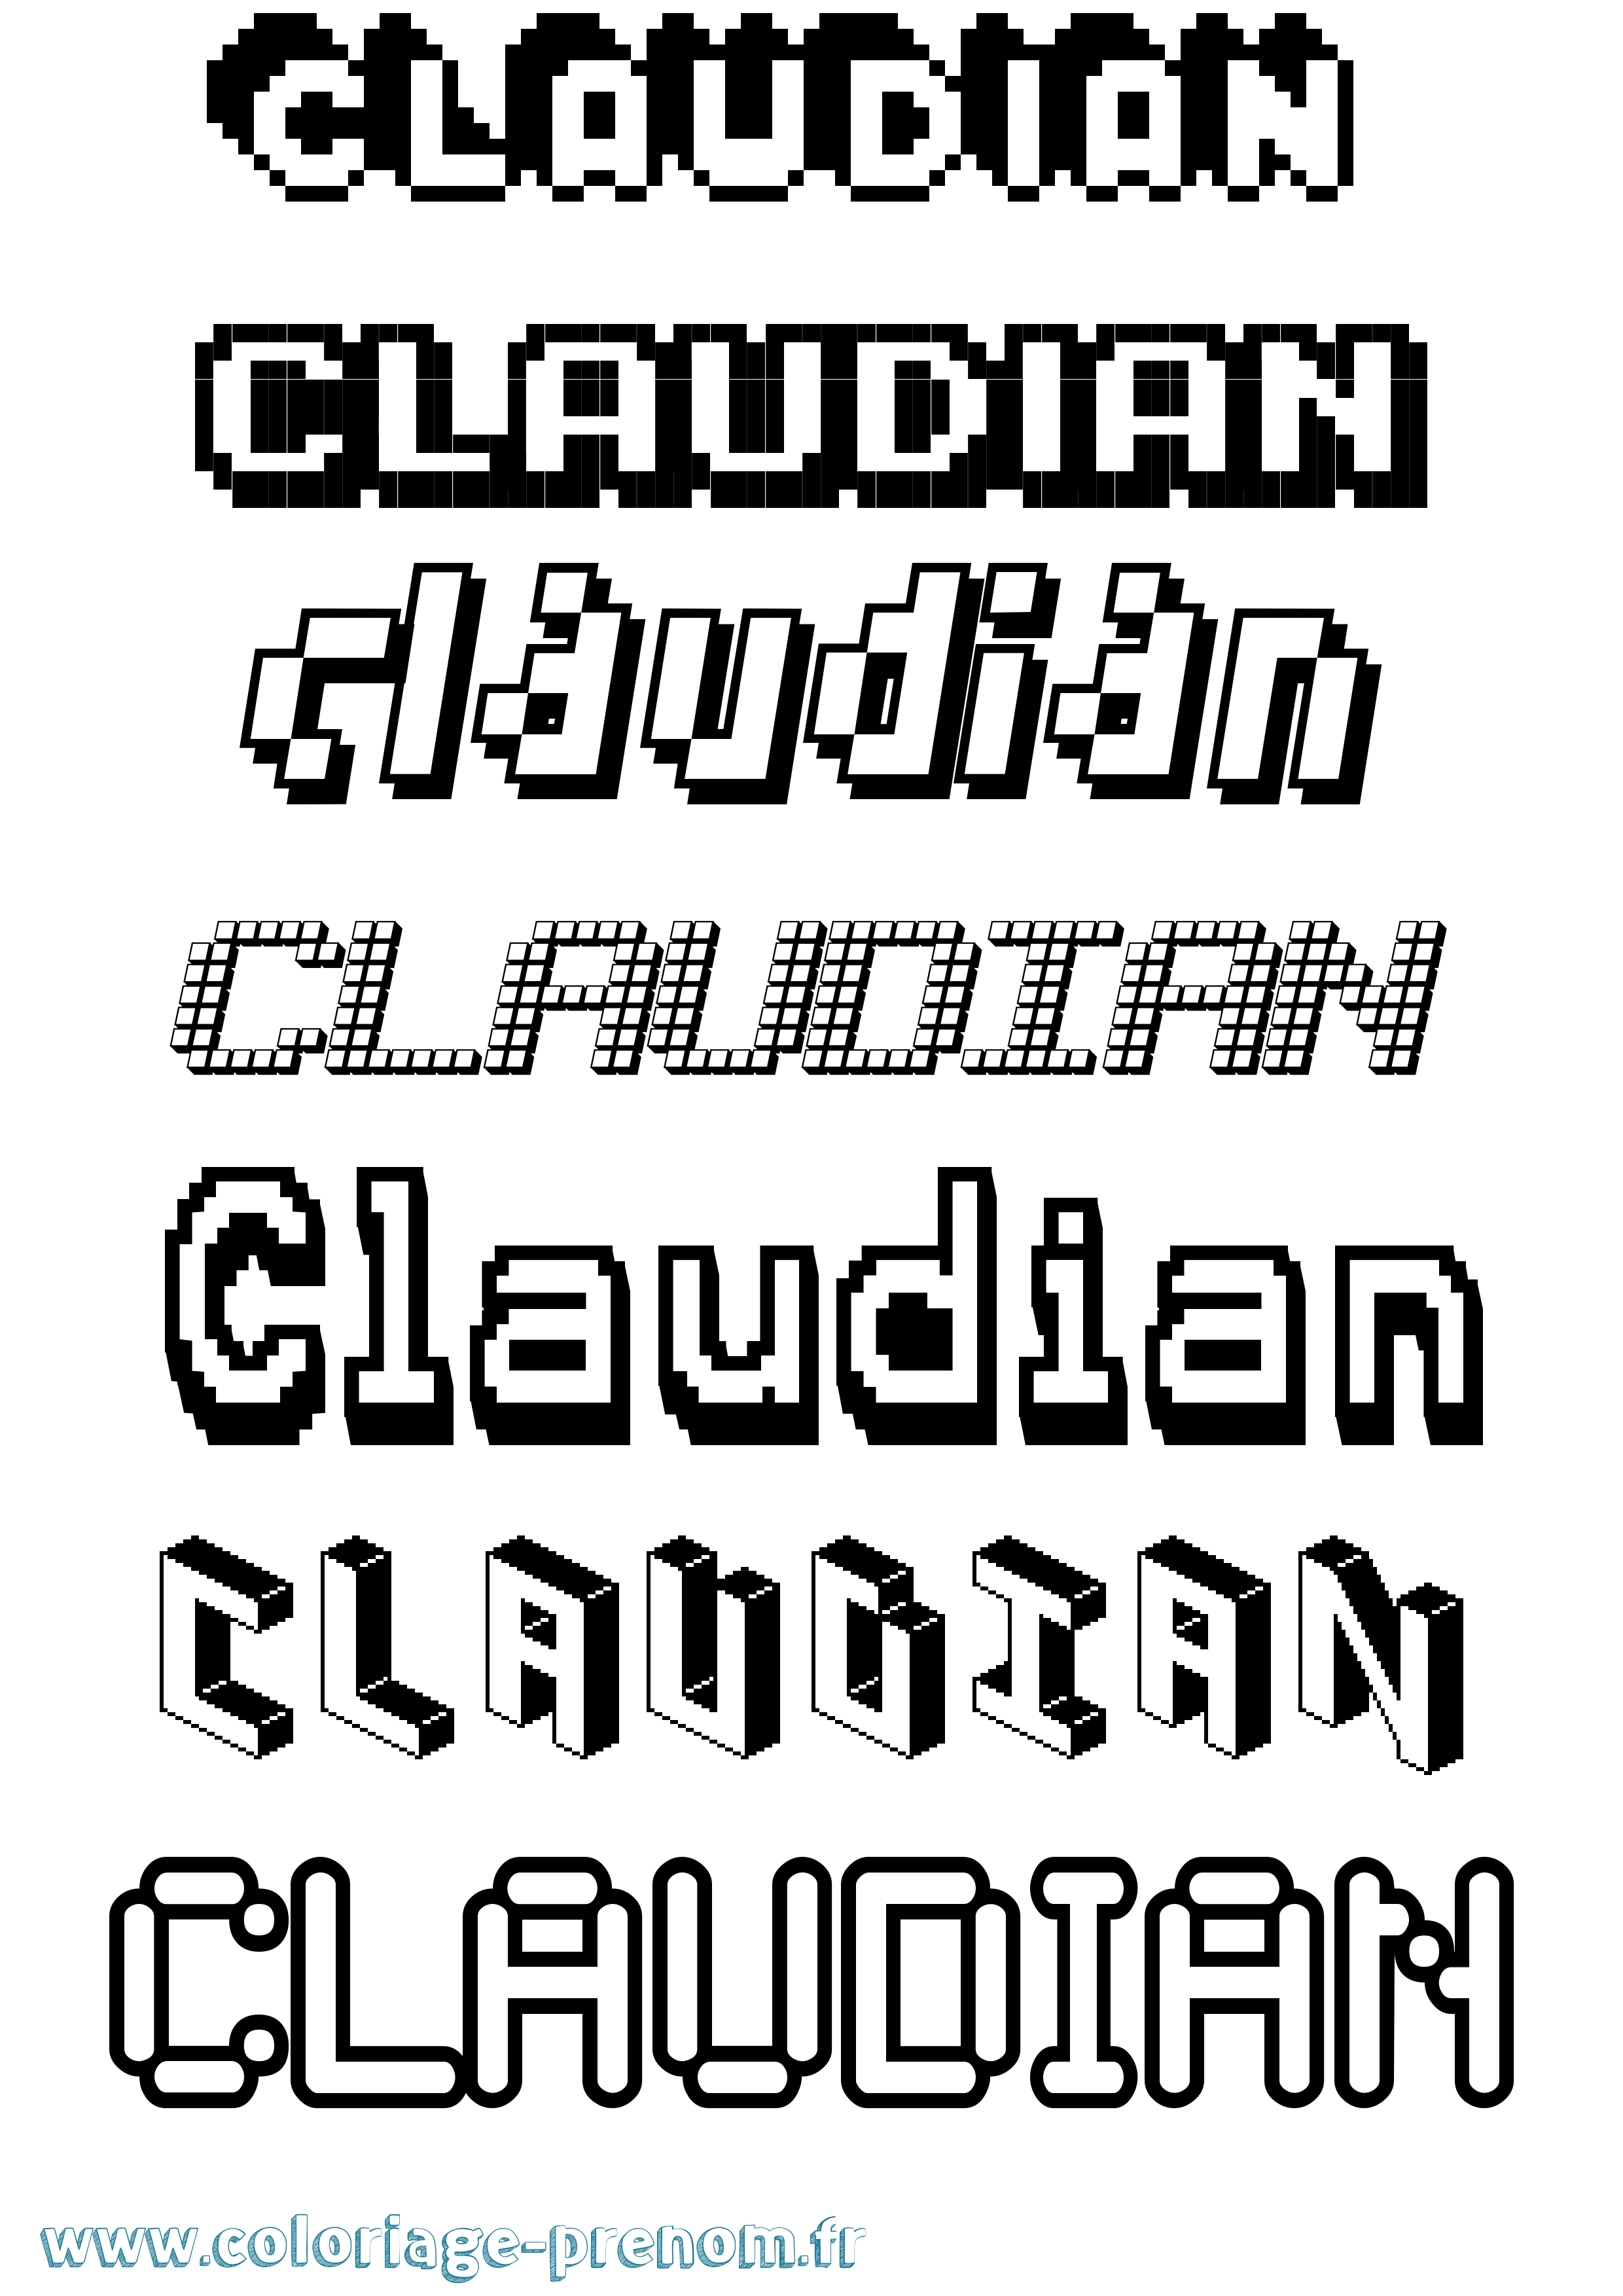 Coloriage prénom Claudian Pixel